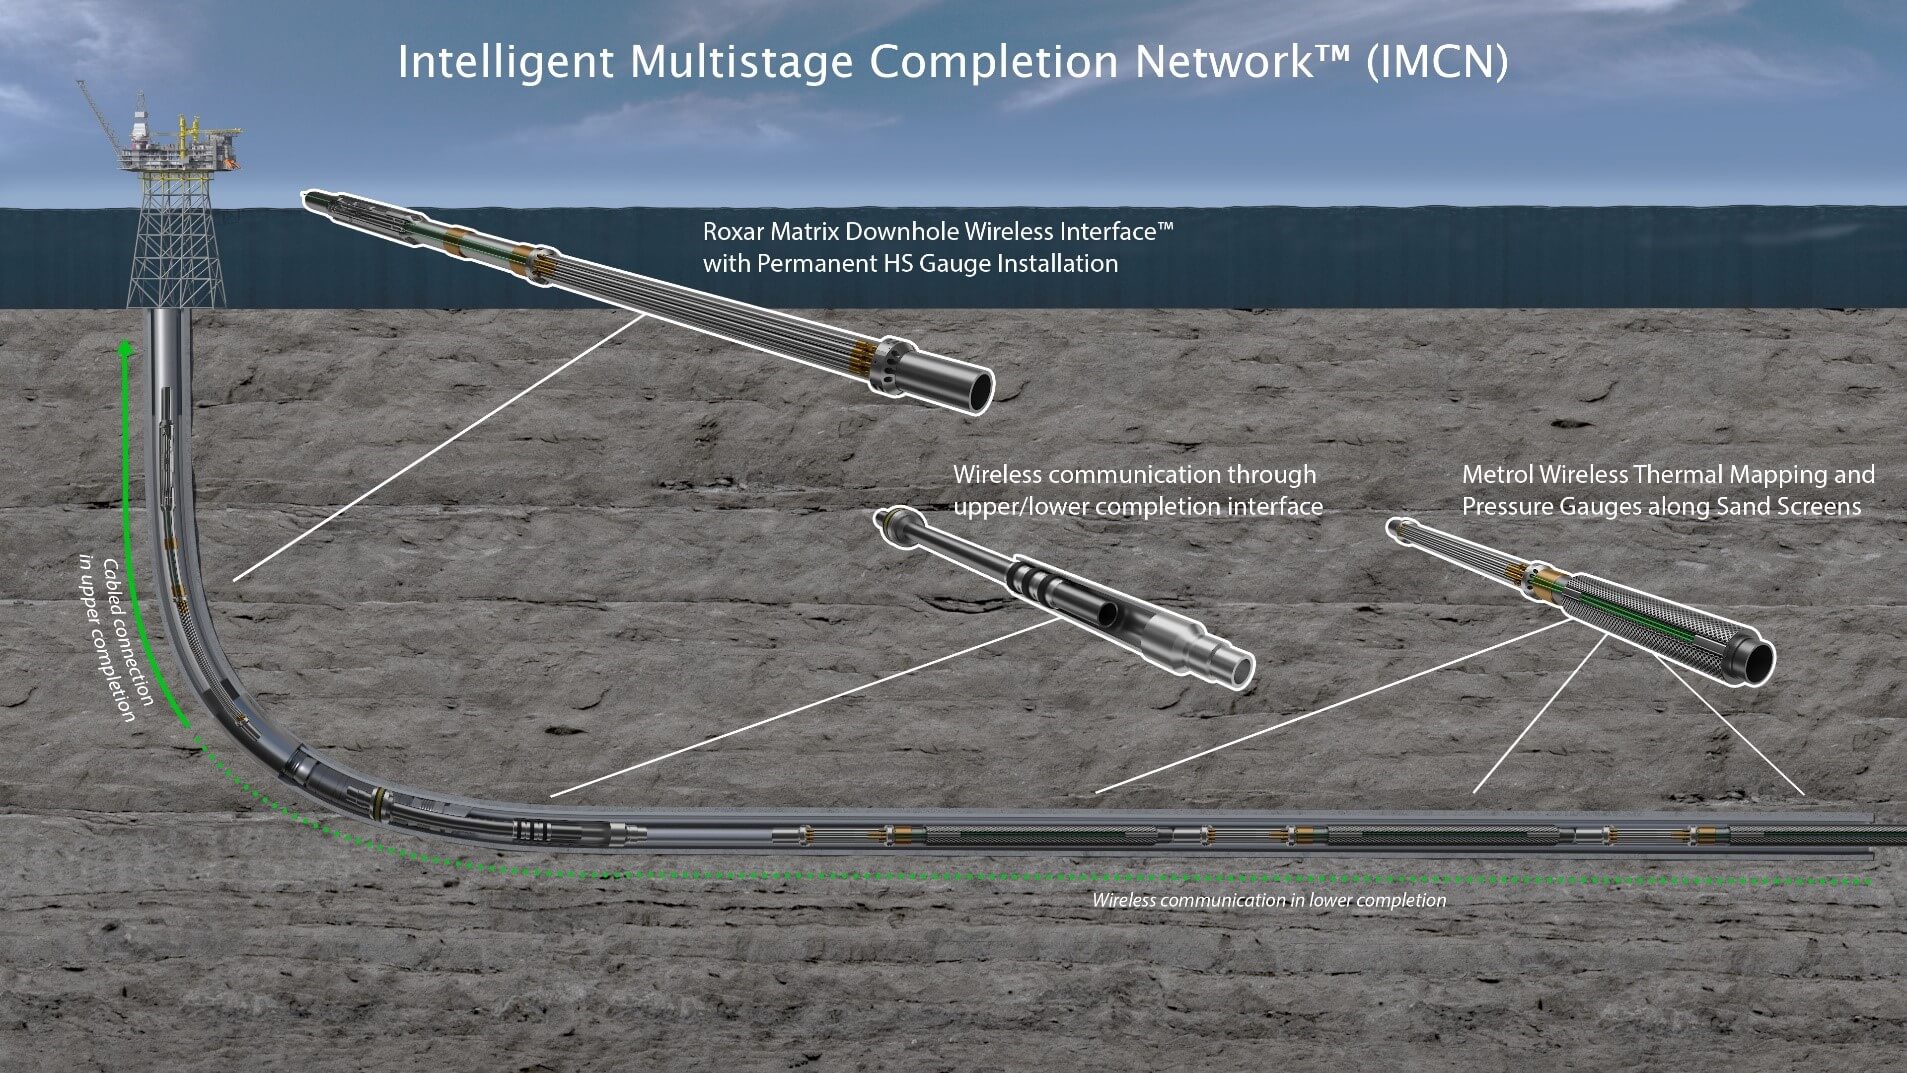 Intelligent Multistage Completion Network (IMCN) solution